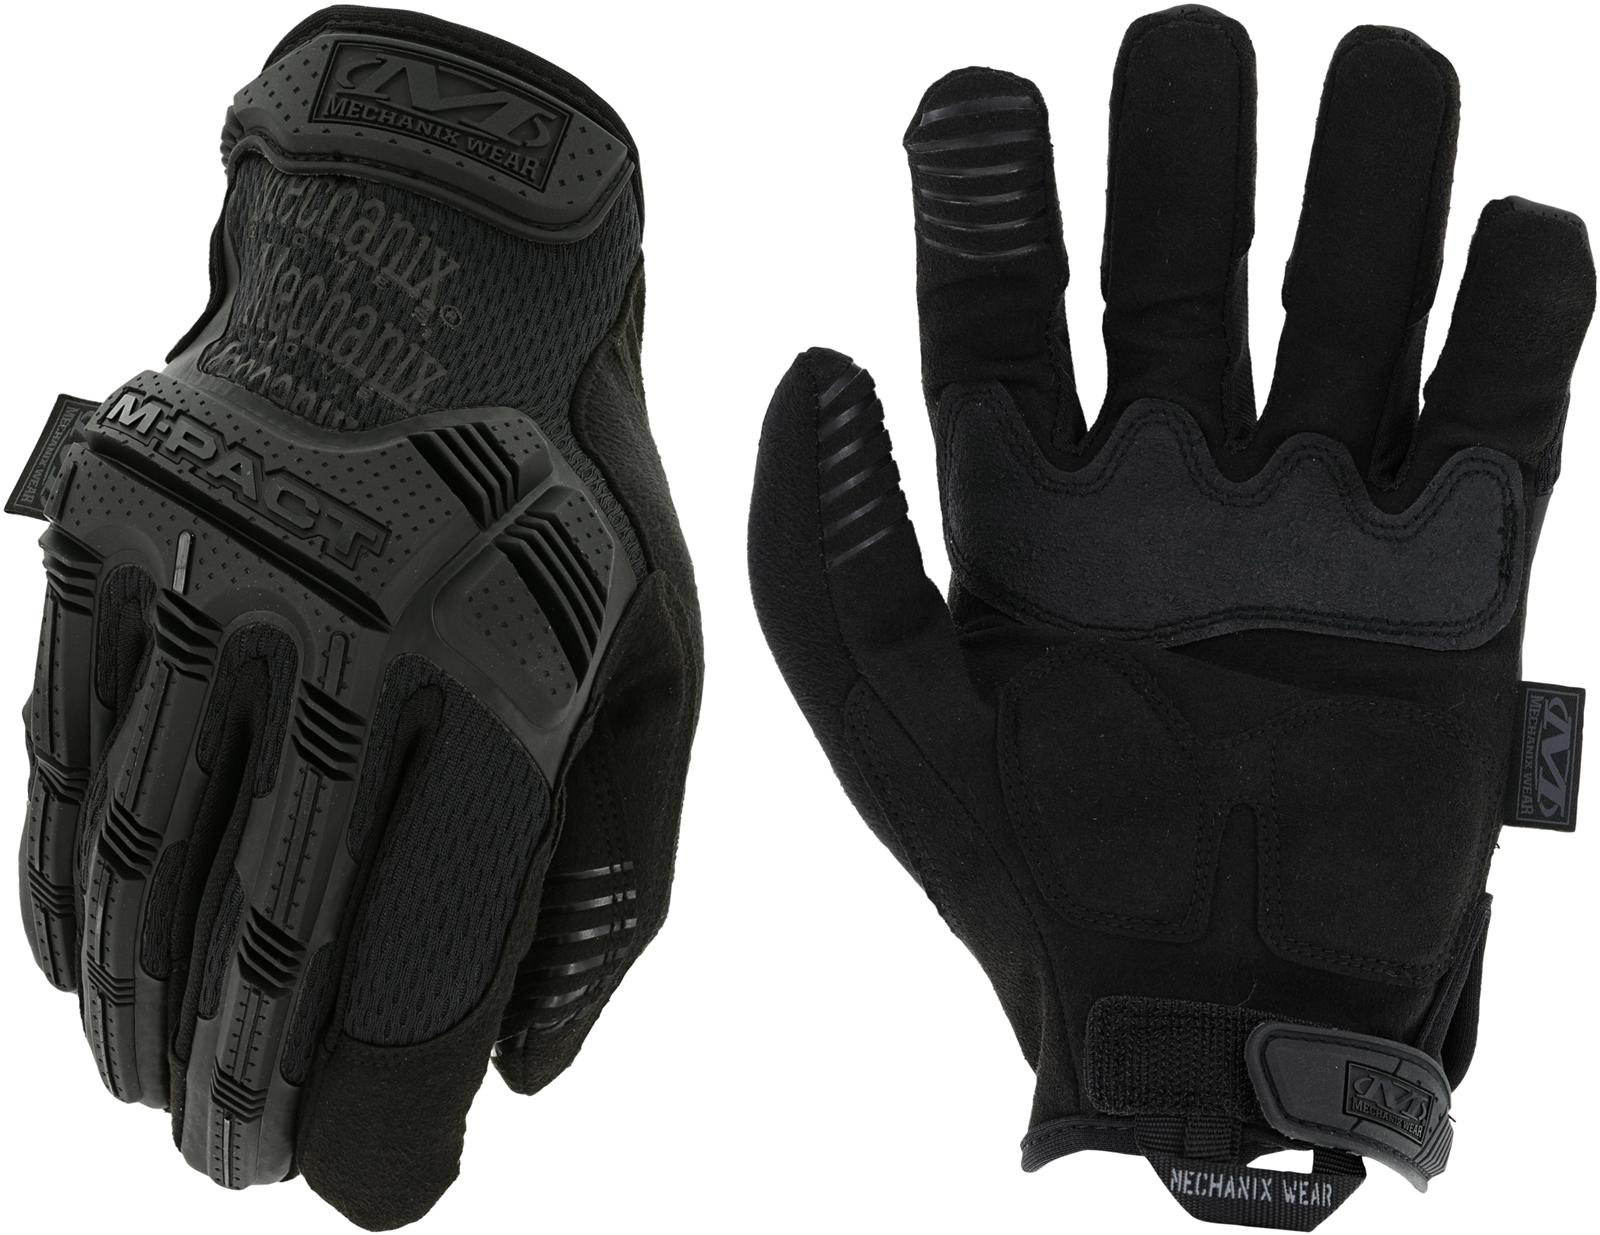 Mechanix Handschuhe M-Pact® schwarz